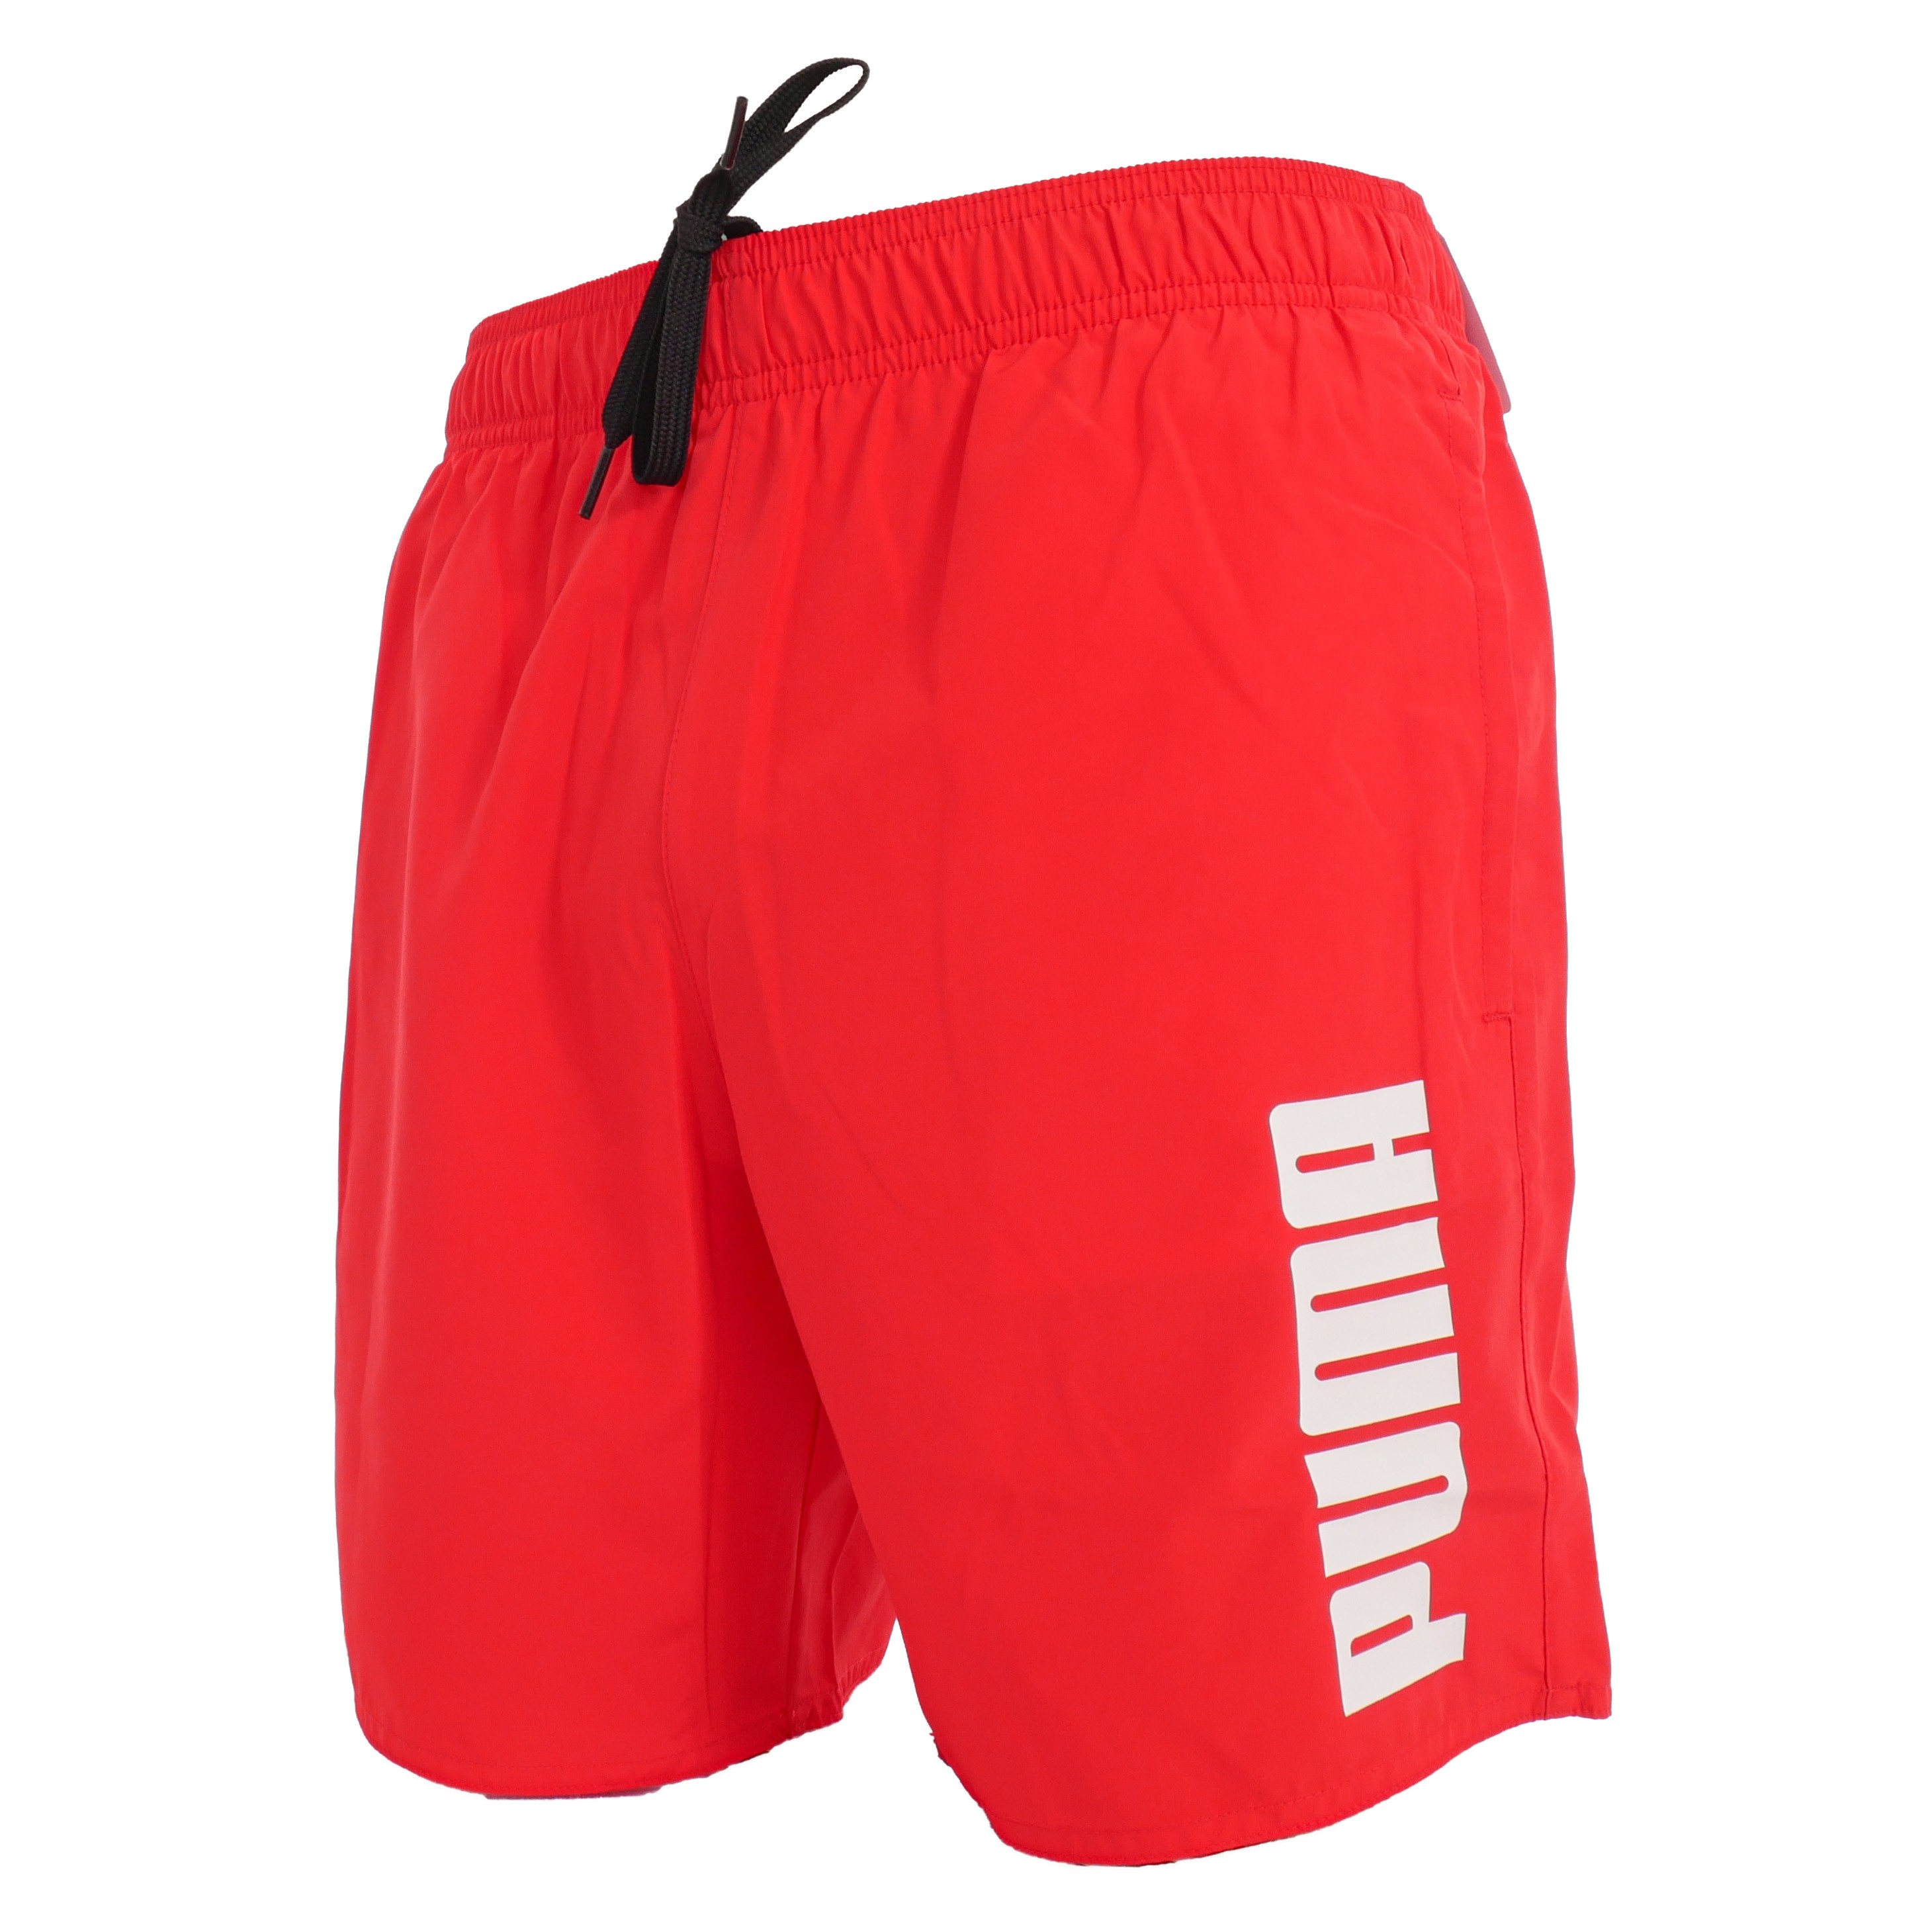 الويل PUMA - red swim shorts: Swim shorts for man brand Puma for sale onl... الويل